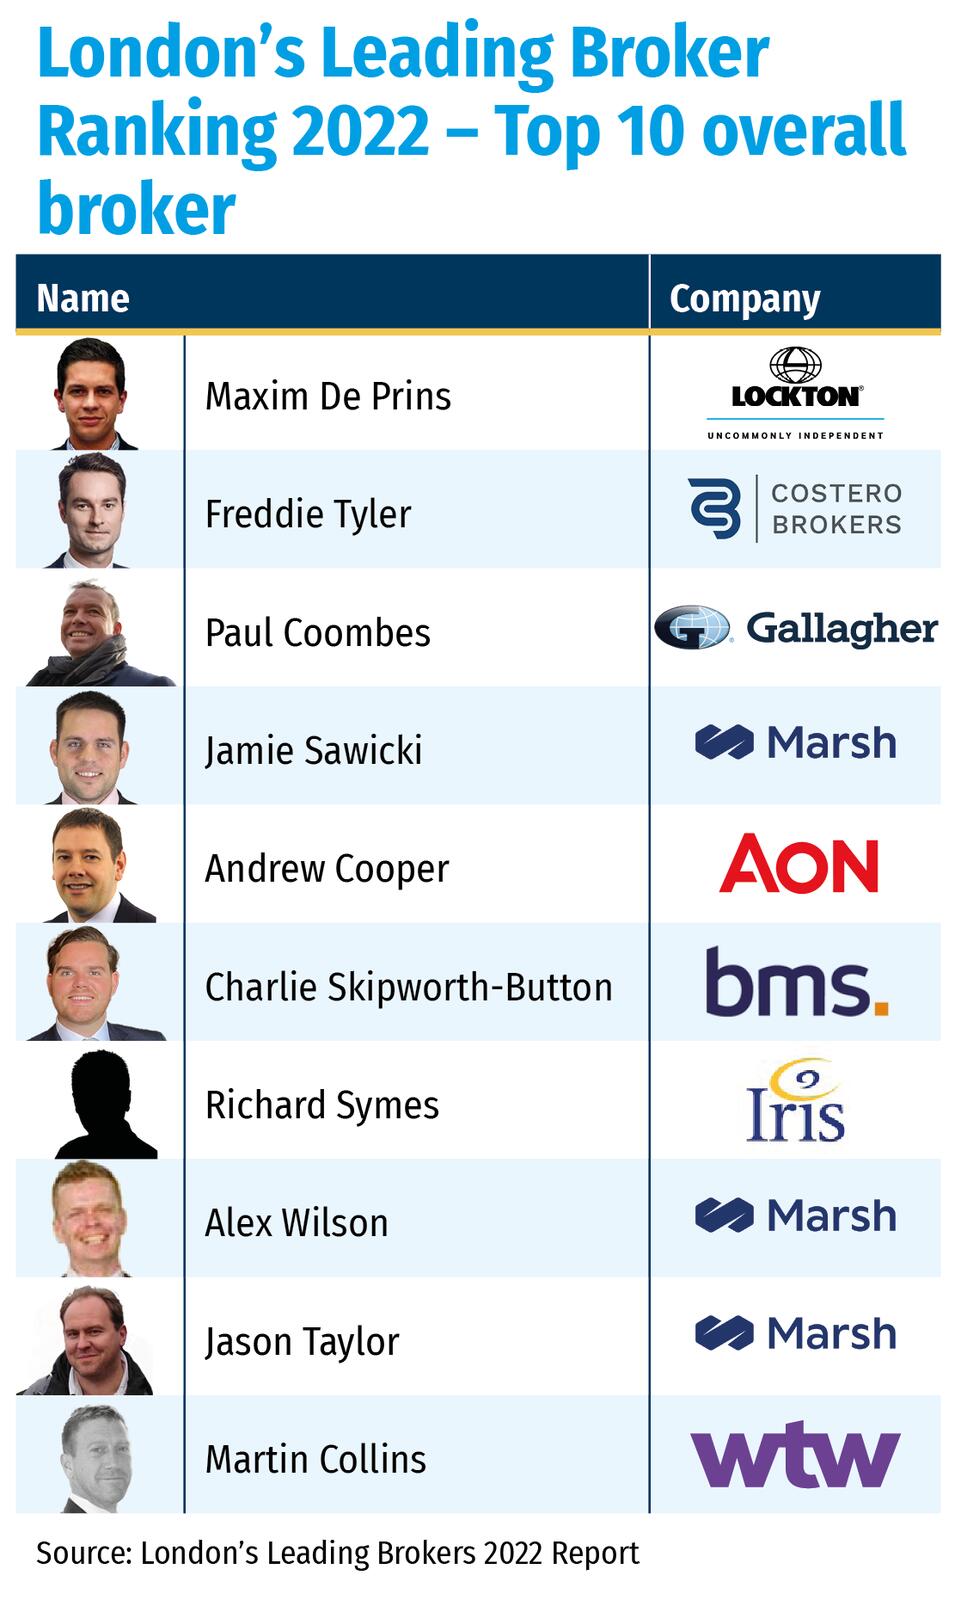 London’s Leading Broker Ranking 2022 – Top 10 overall broker